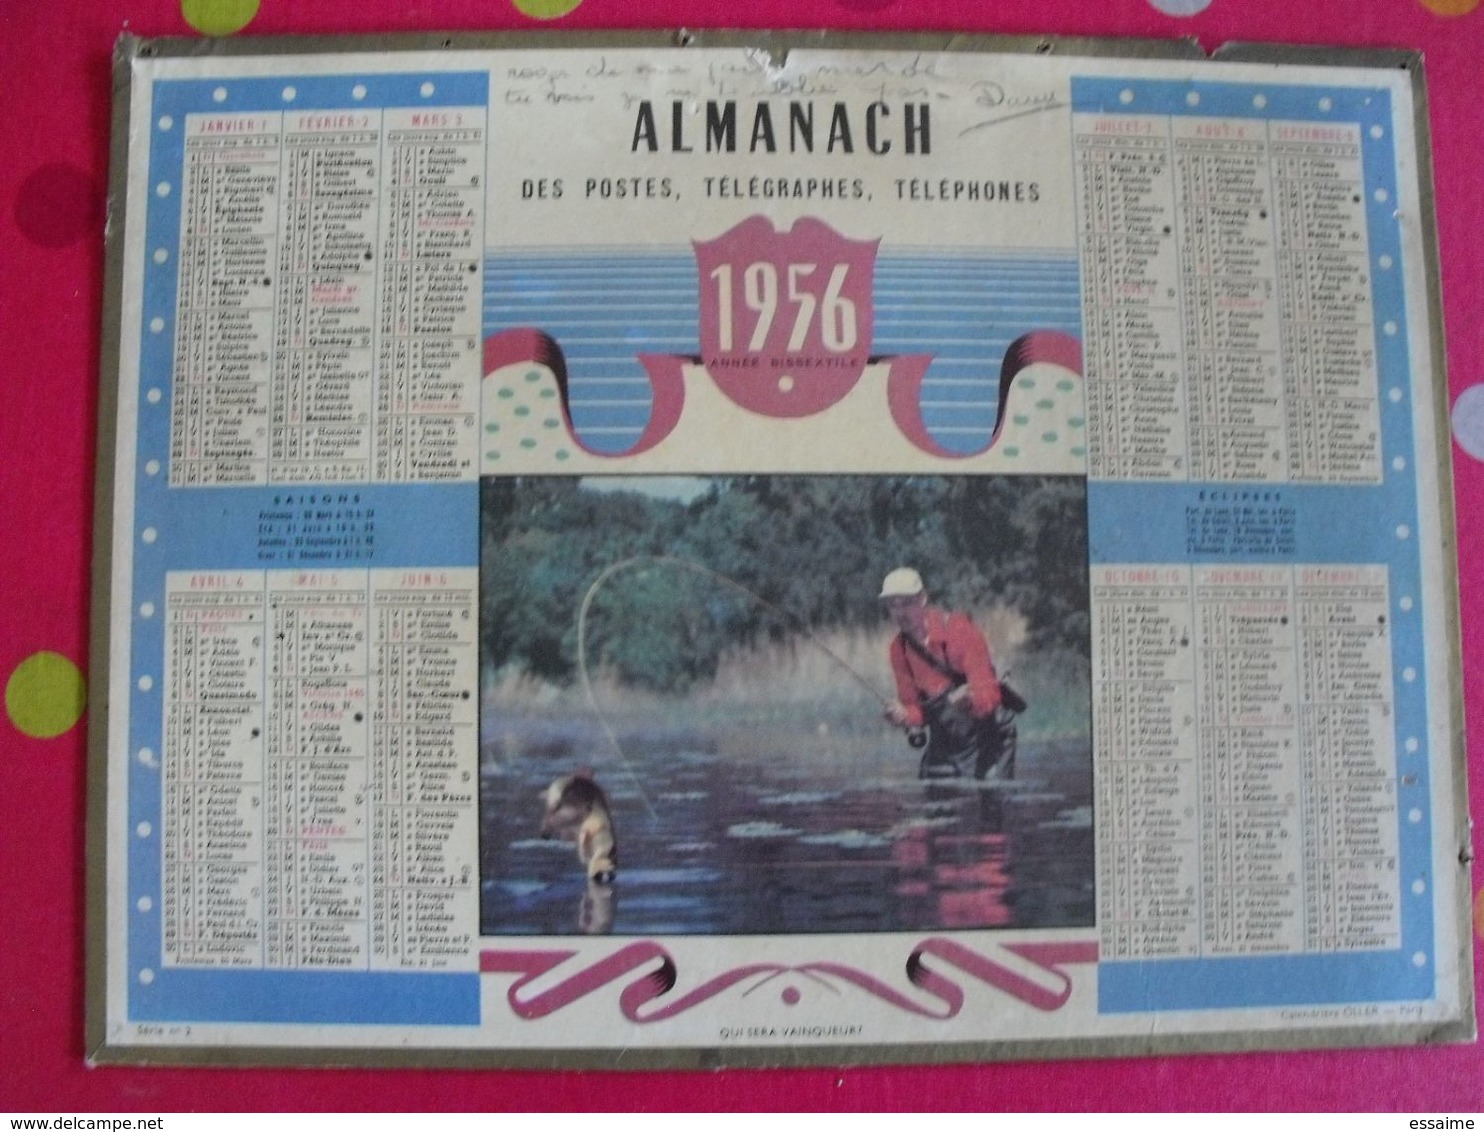 Almanach Des PTT. Cantal. Calendrier Poste 1956. Pêche - Grossformat : 1941-60